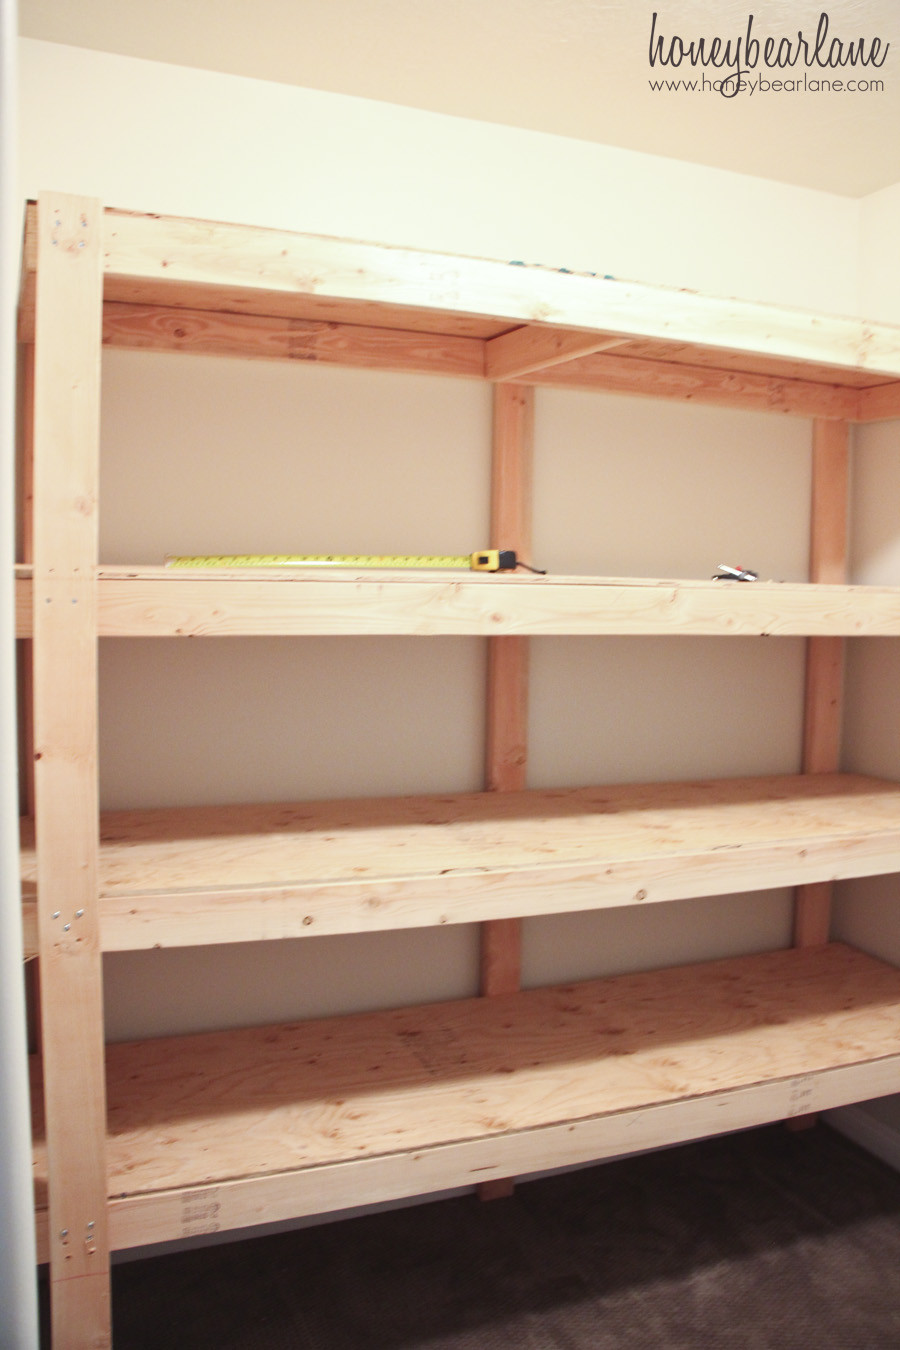 DIY Shelves Plans
 DIY Storage Shelves HoneyBear Lane